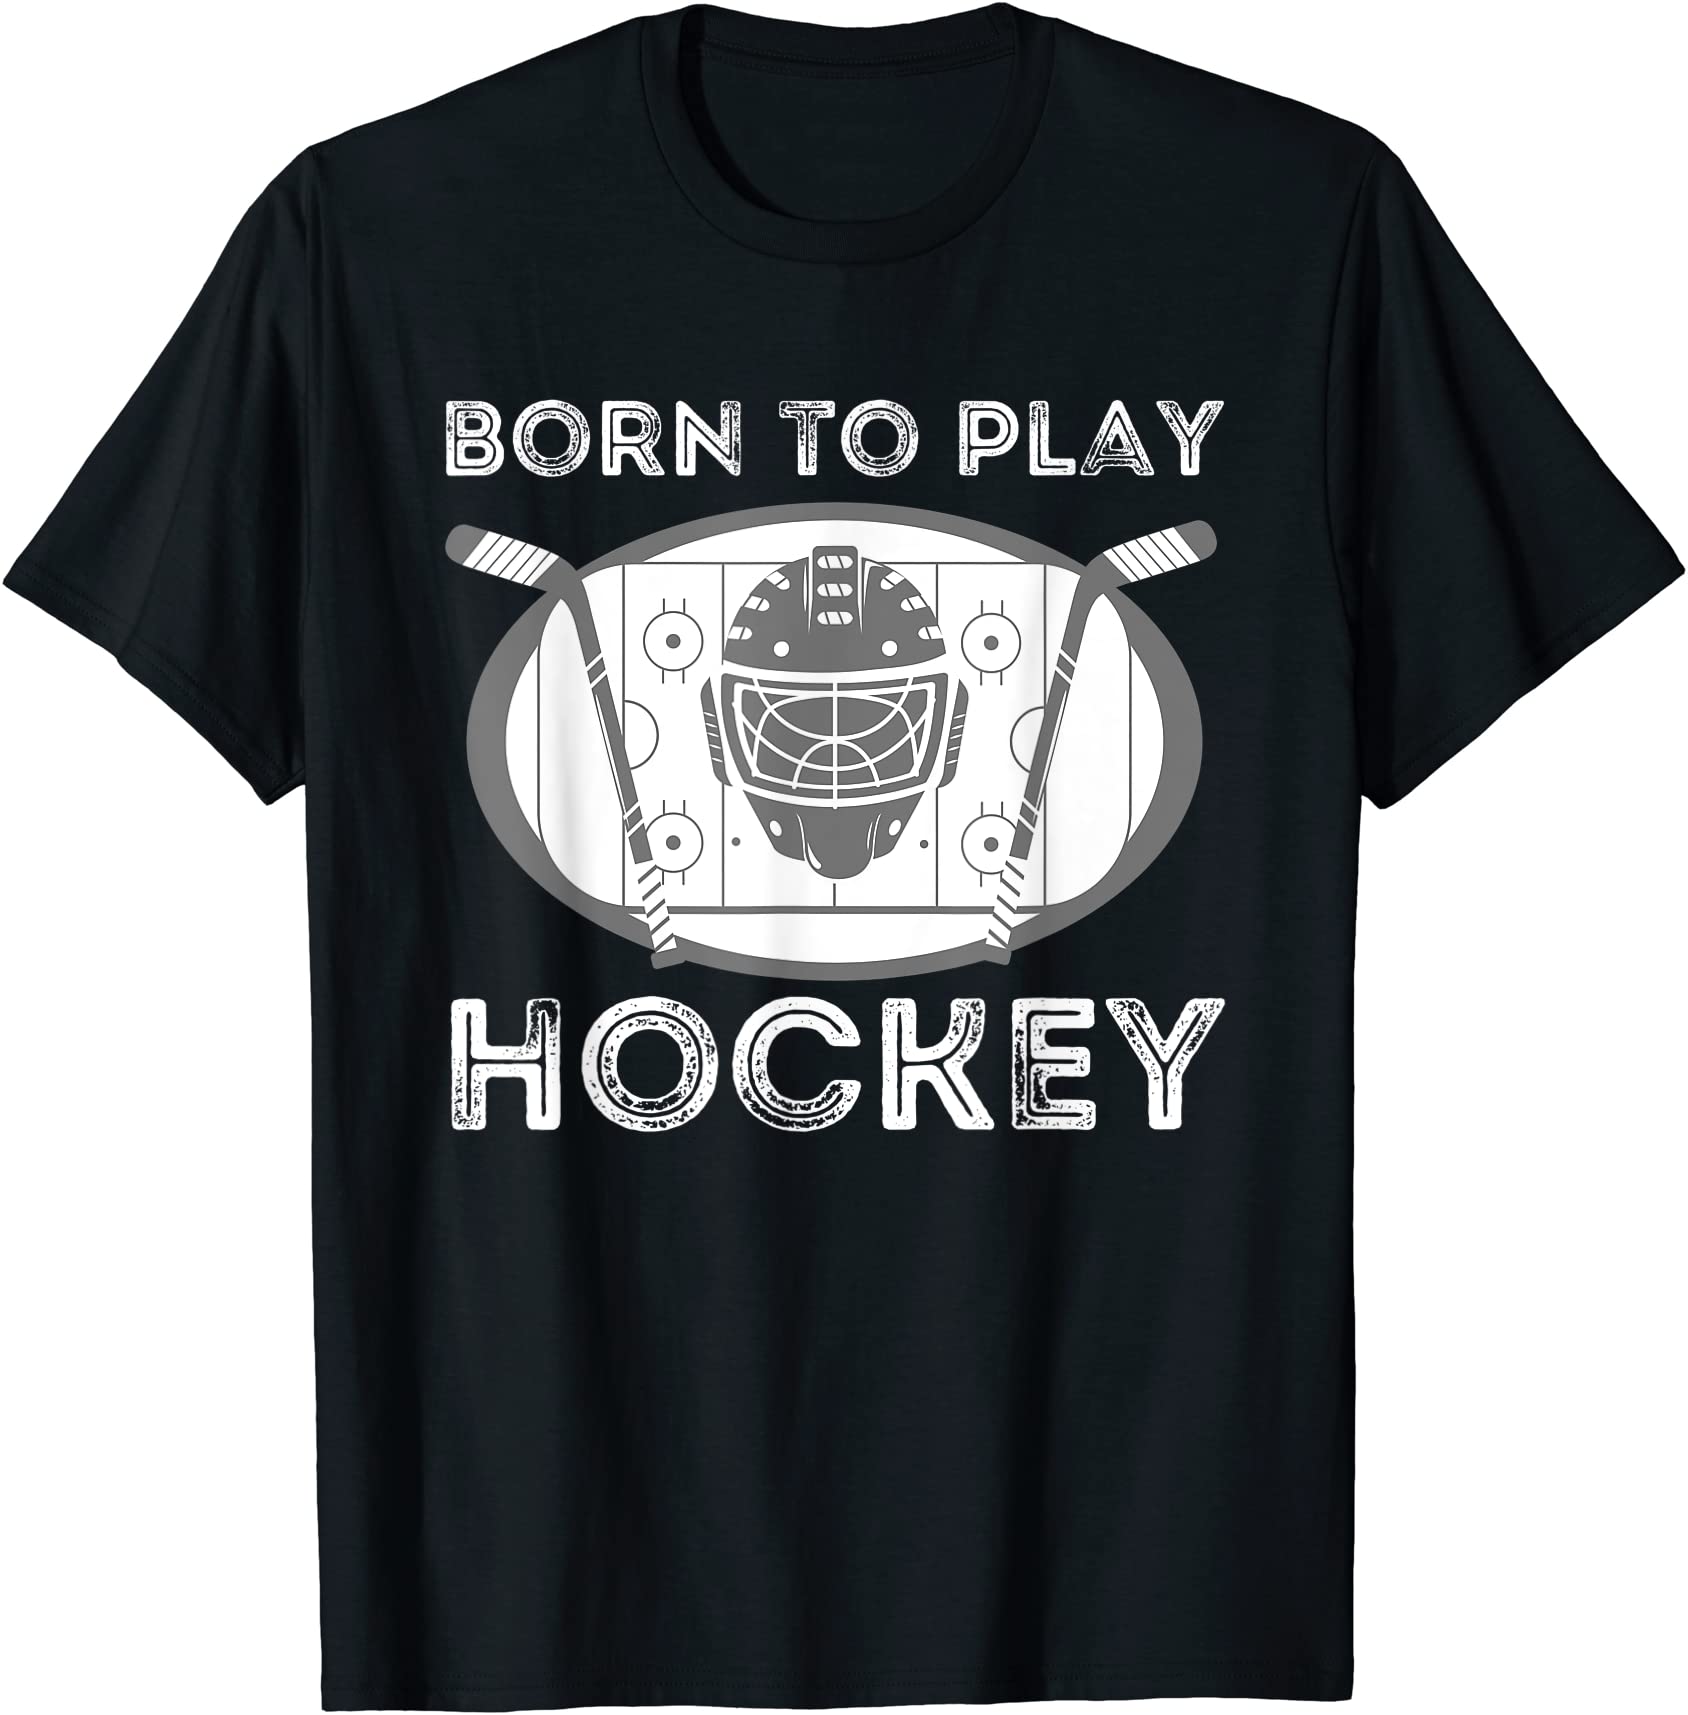 born to play hockey funny ice hockey player gift t shirt men - Buy t ...